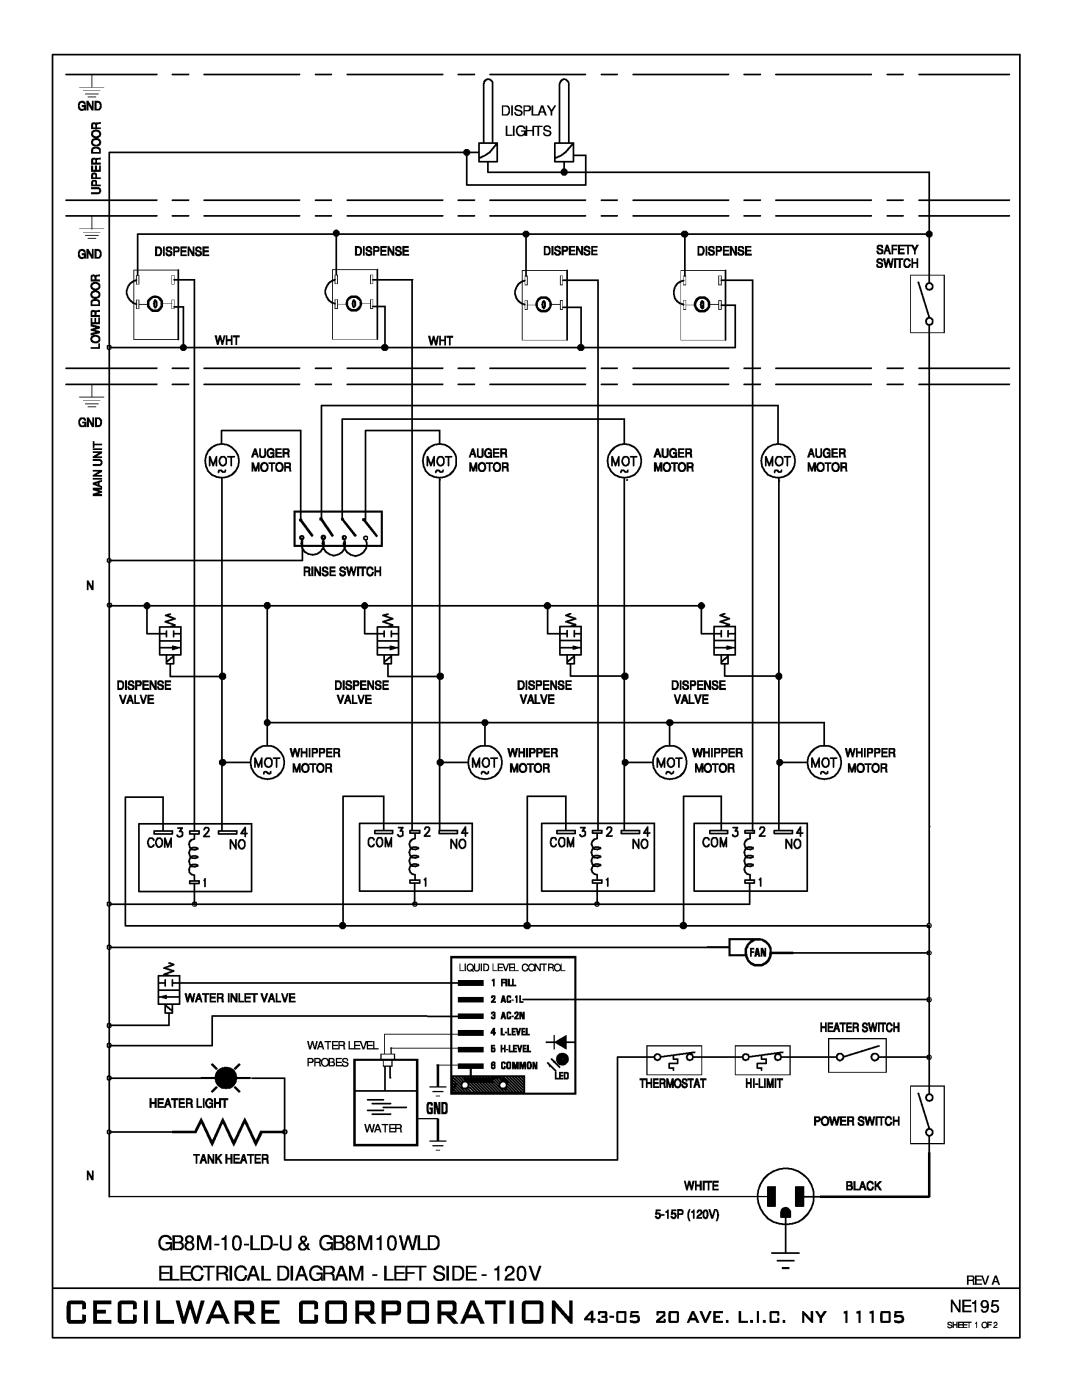 Cecilware GB5MV-10-LD GB8M-10-LD-U& GB8M10WLD, Electrical Diagram - Left Side, Display, Lights, NE195, SHEET 1 OF 